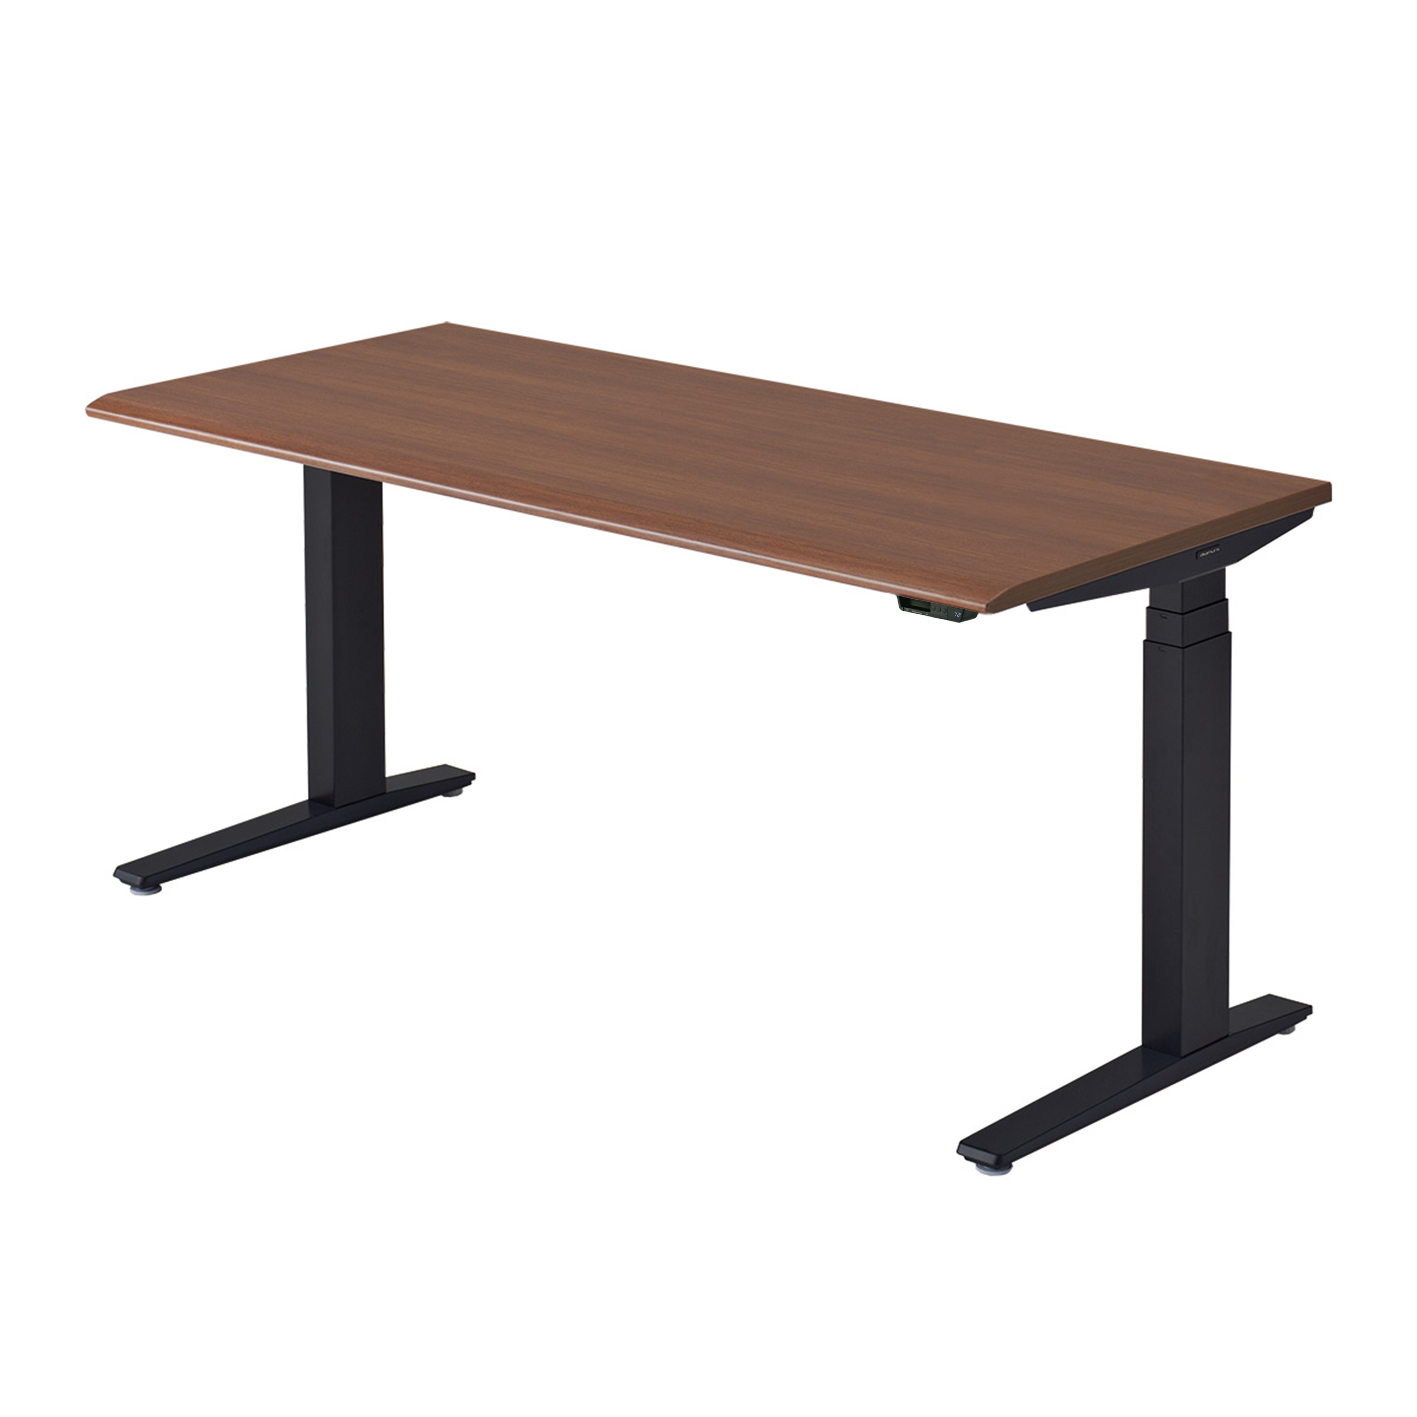 Okamura height adjustable table in dark wood